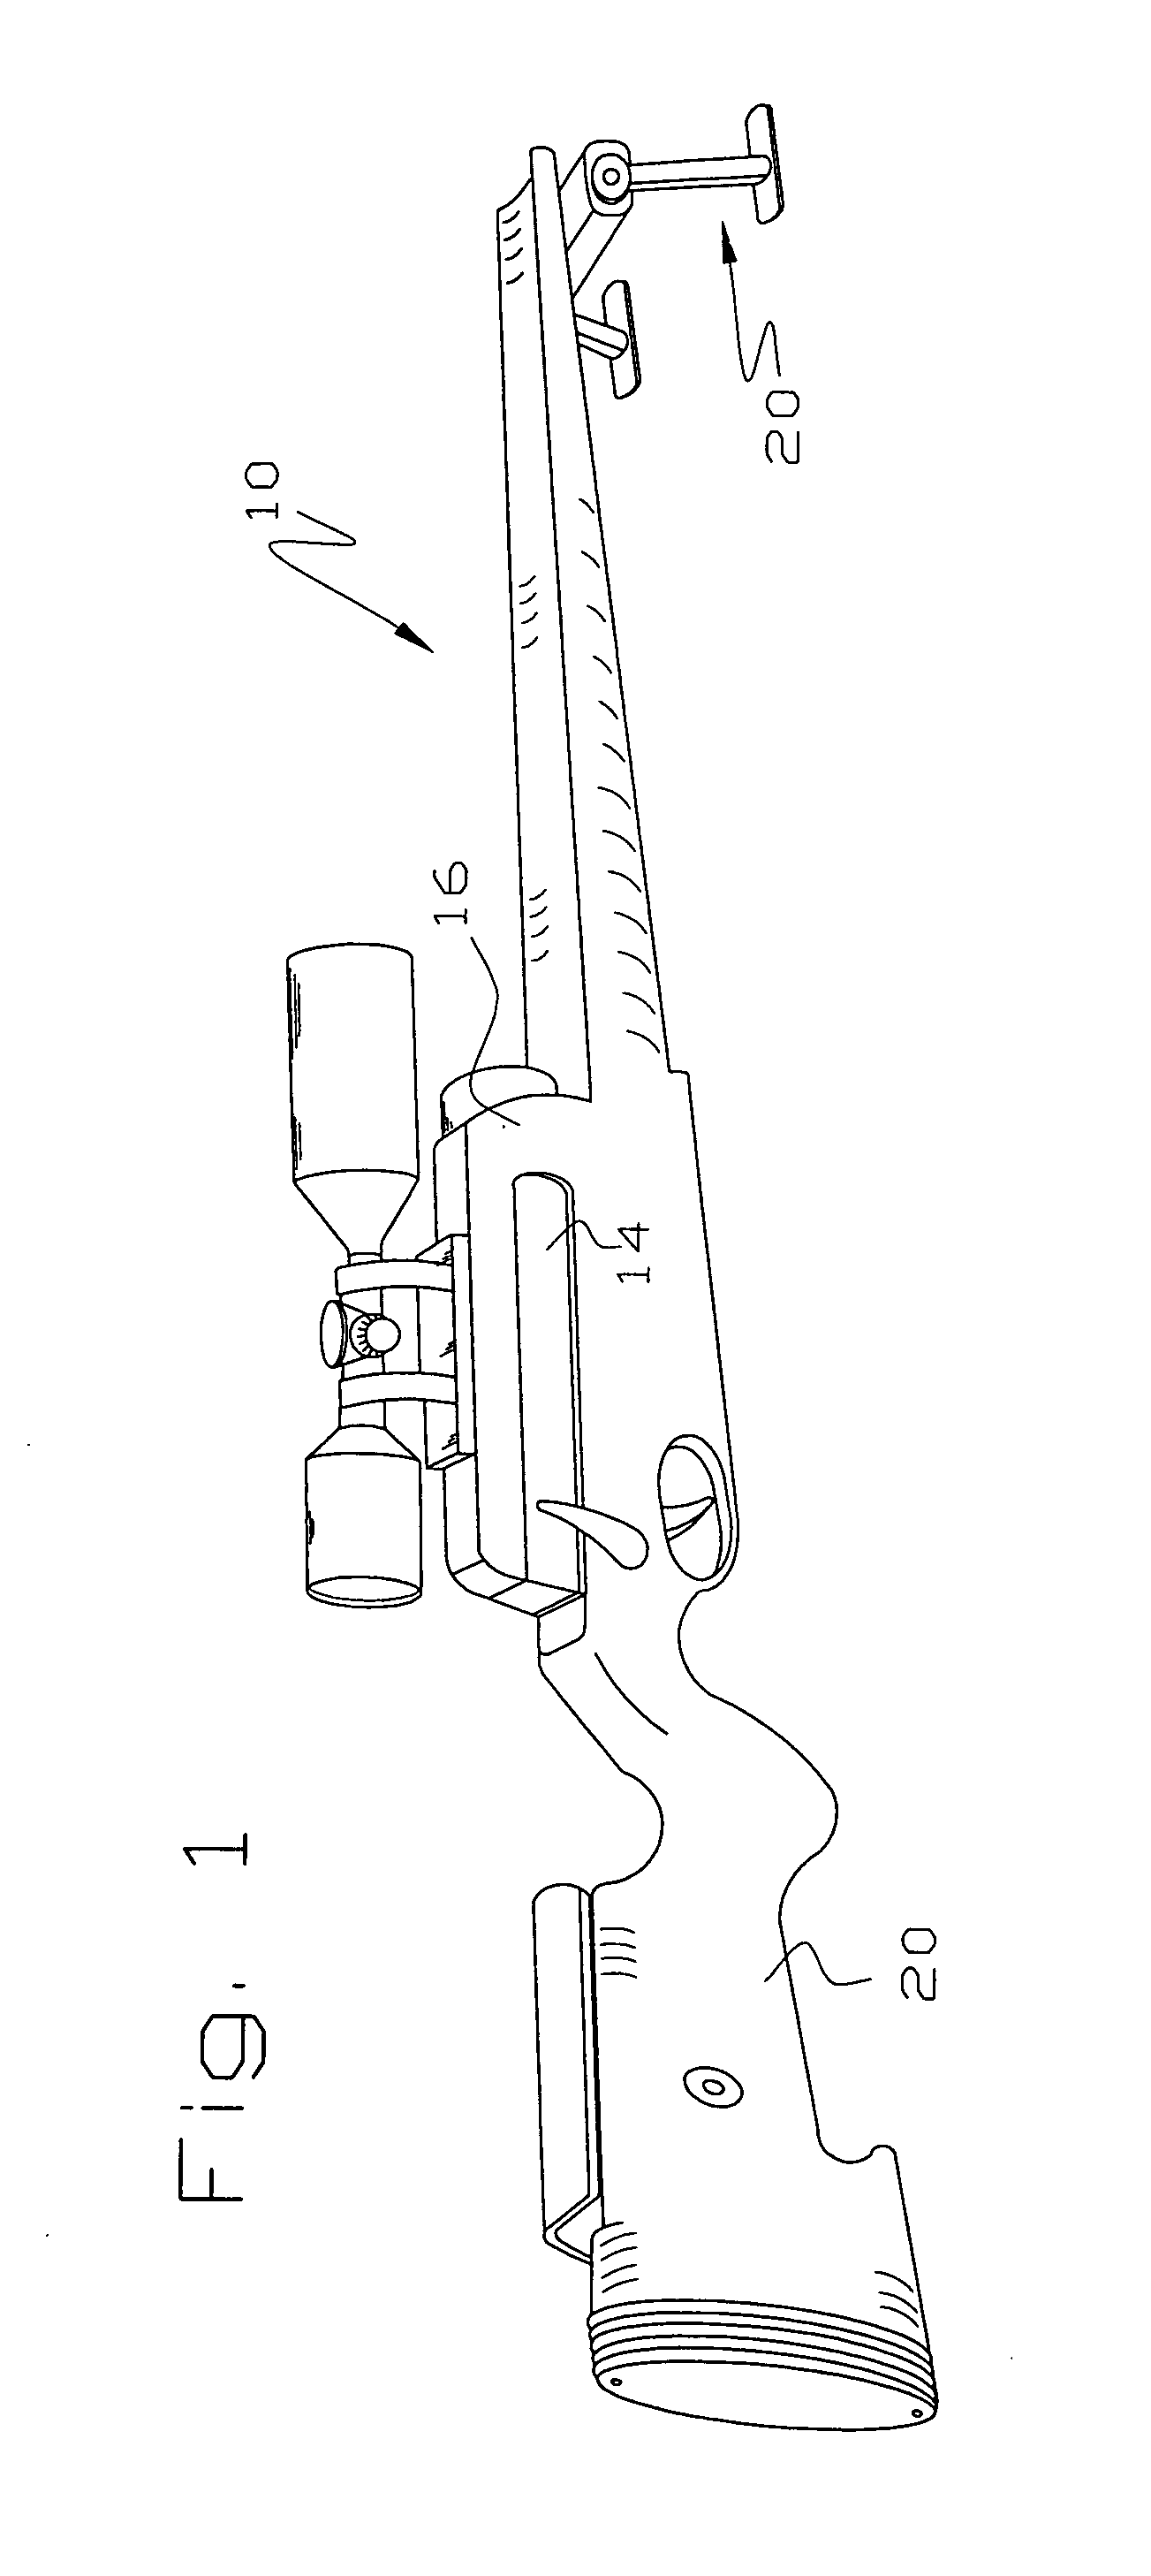 Noise suppressor for firearms